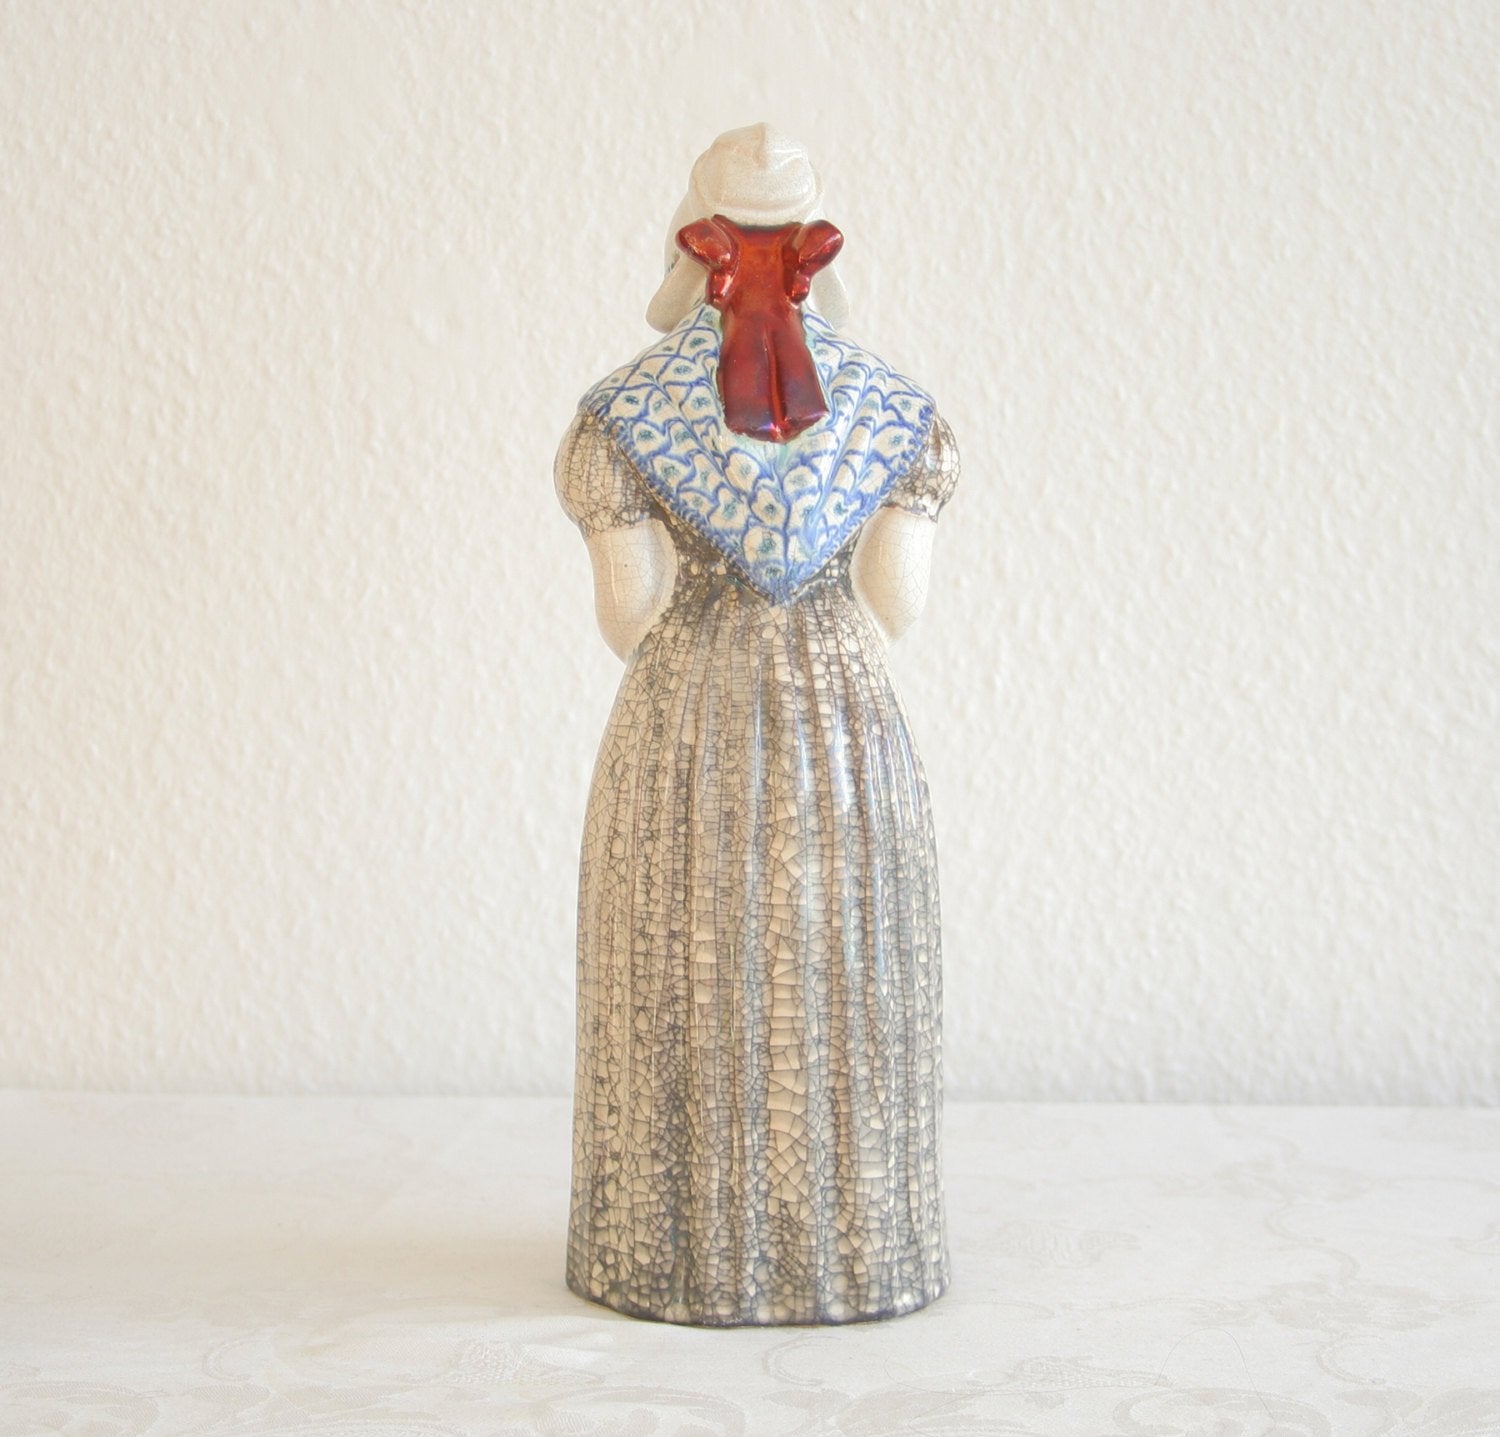 MICHAEL ANDERSEN Large Decorated Woman in Traditional Bornholm Dress Ceramic Figurine Mollaris.com 